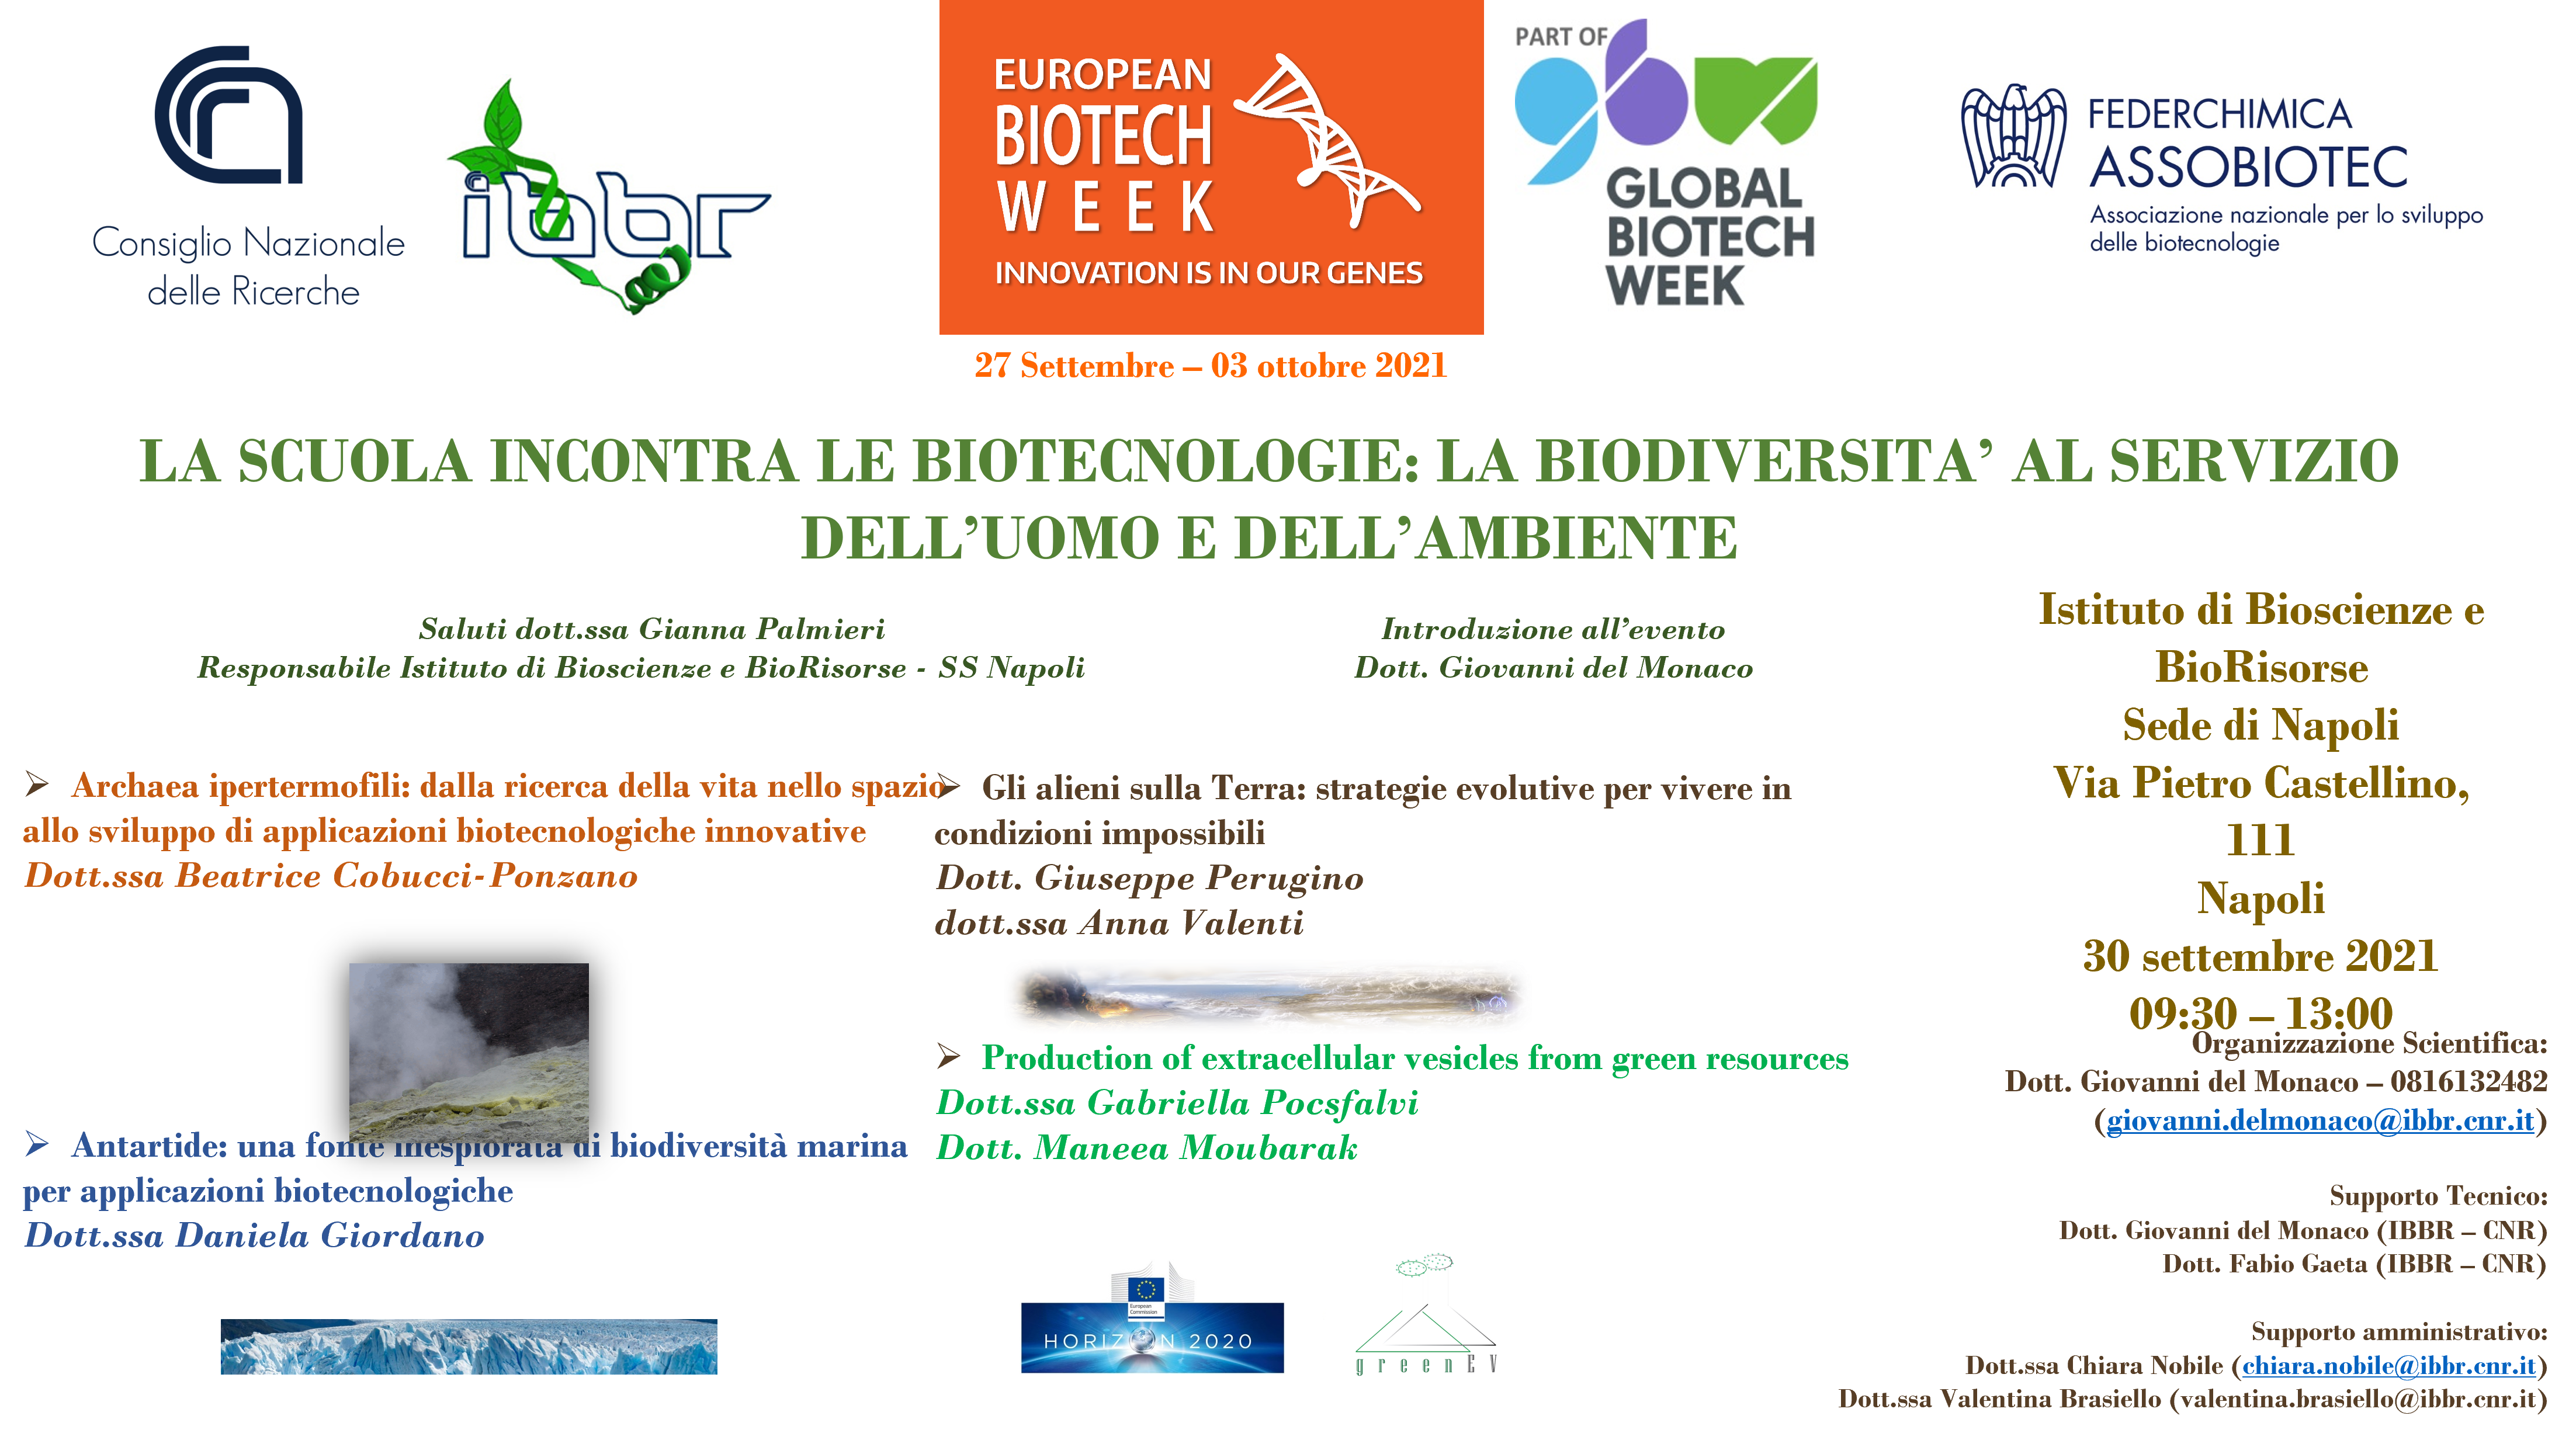 9th European Biotech Week